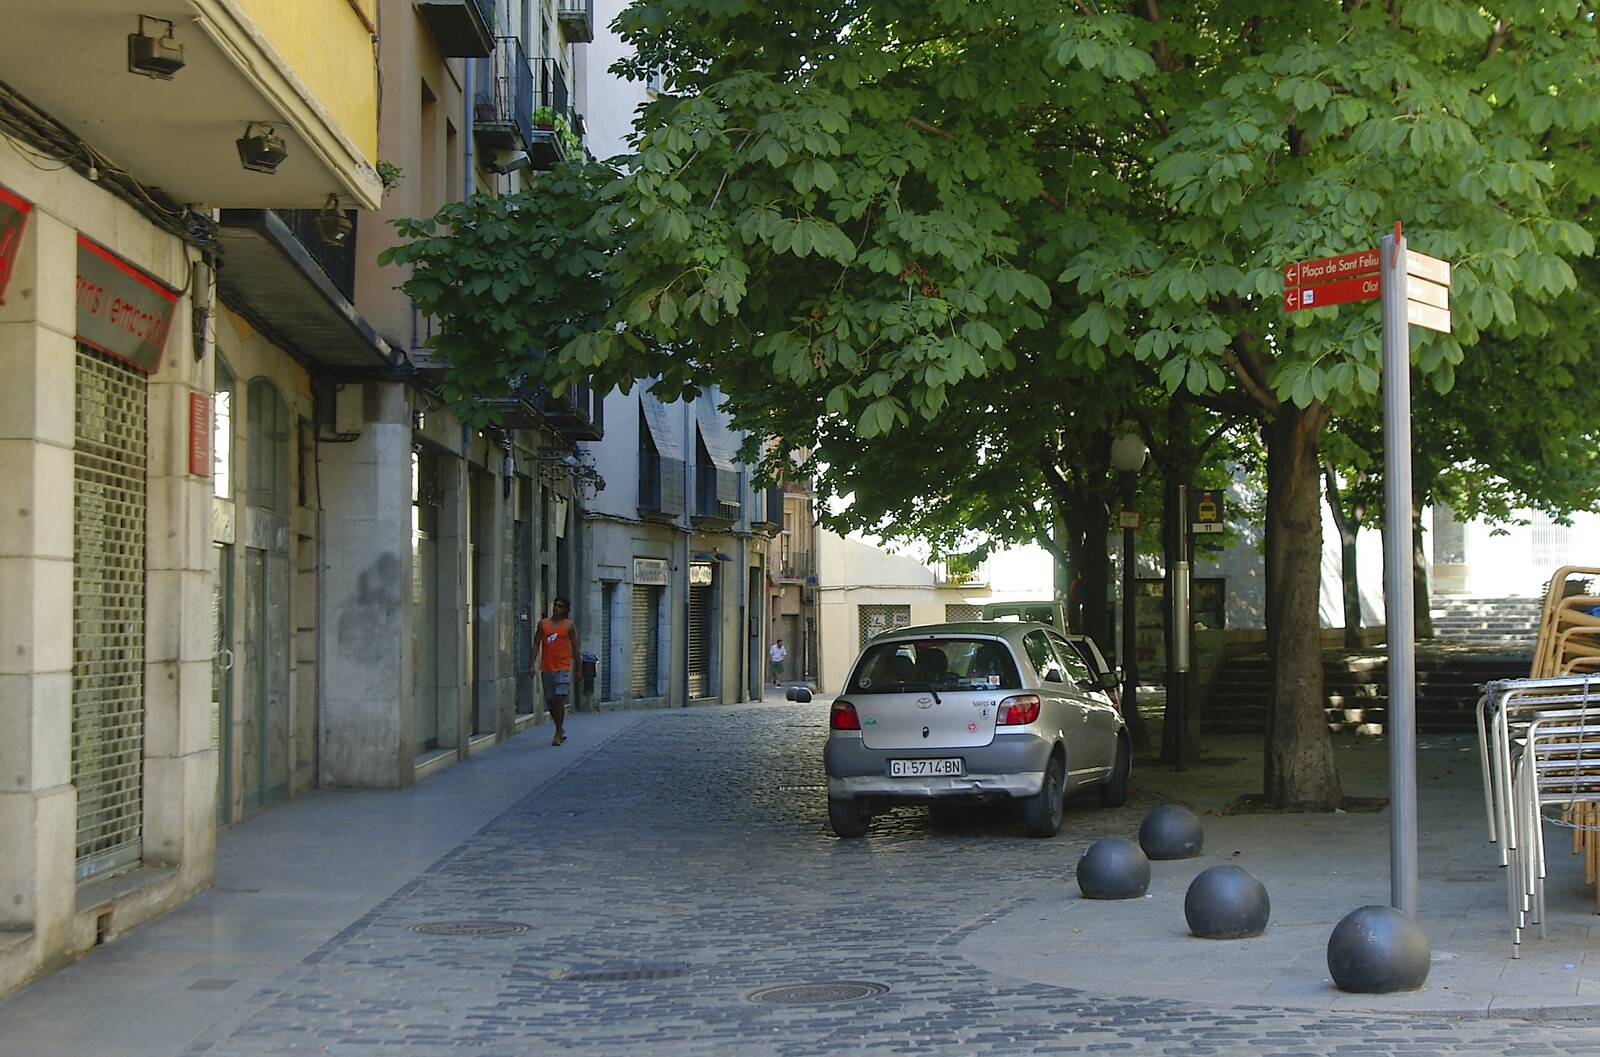 A leafy back street from Girona, Catalunya, Spain - 17th September 2006